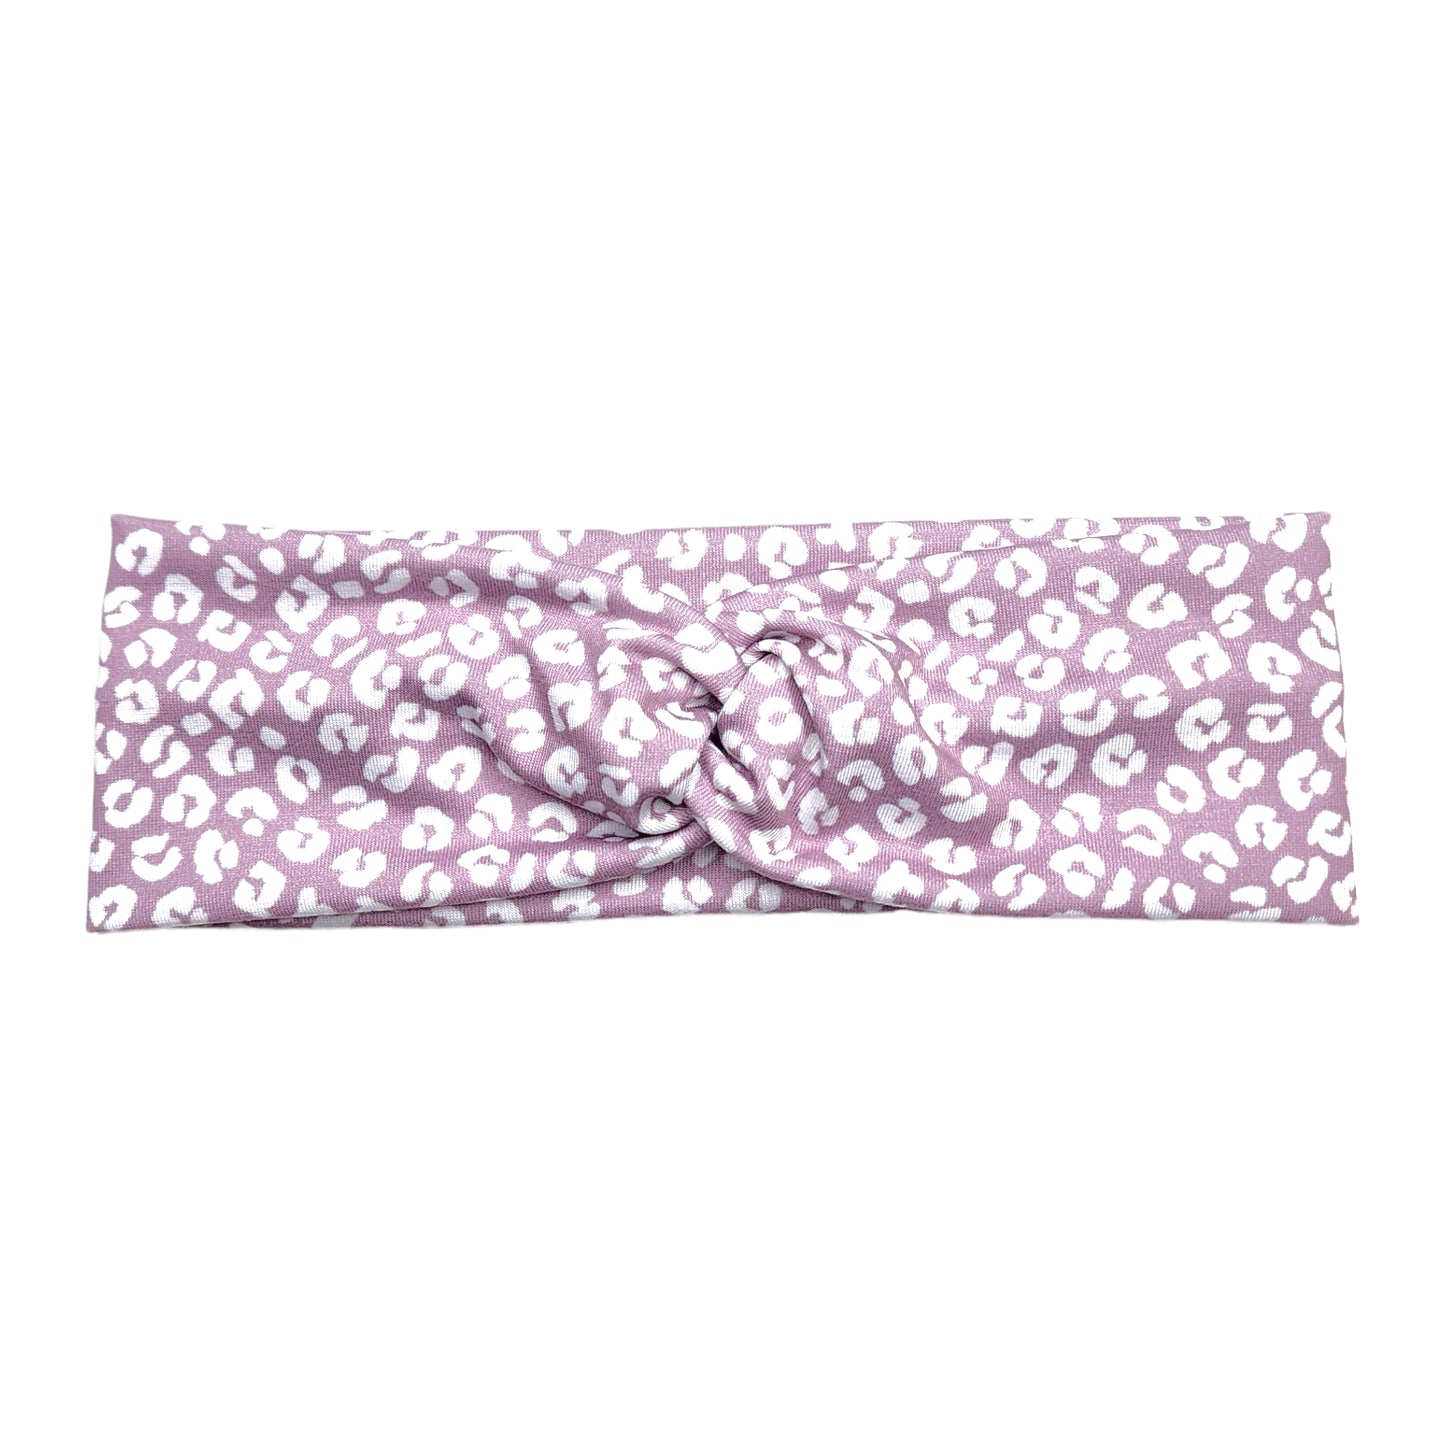 Lavender Cheetah Print Headband for Women